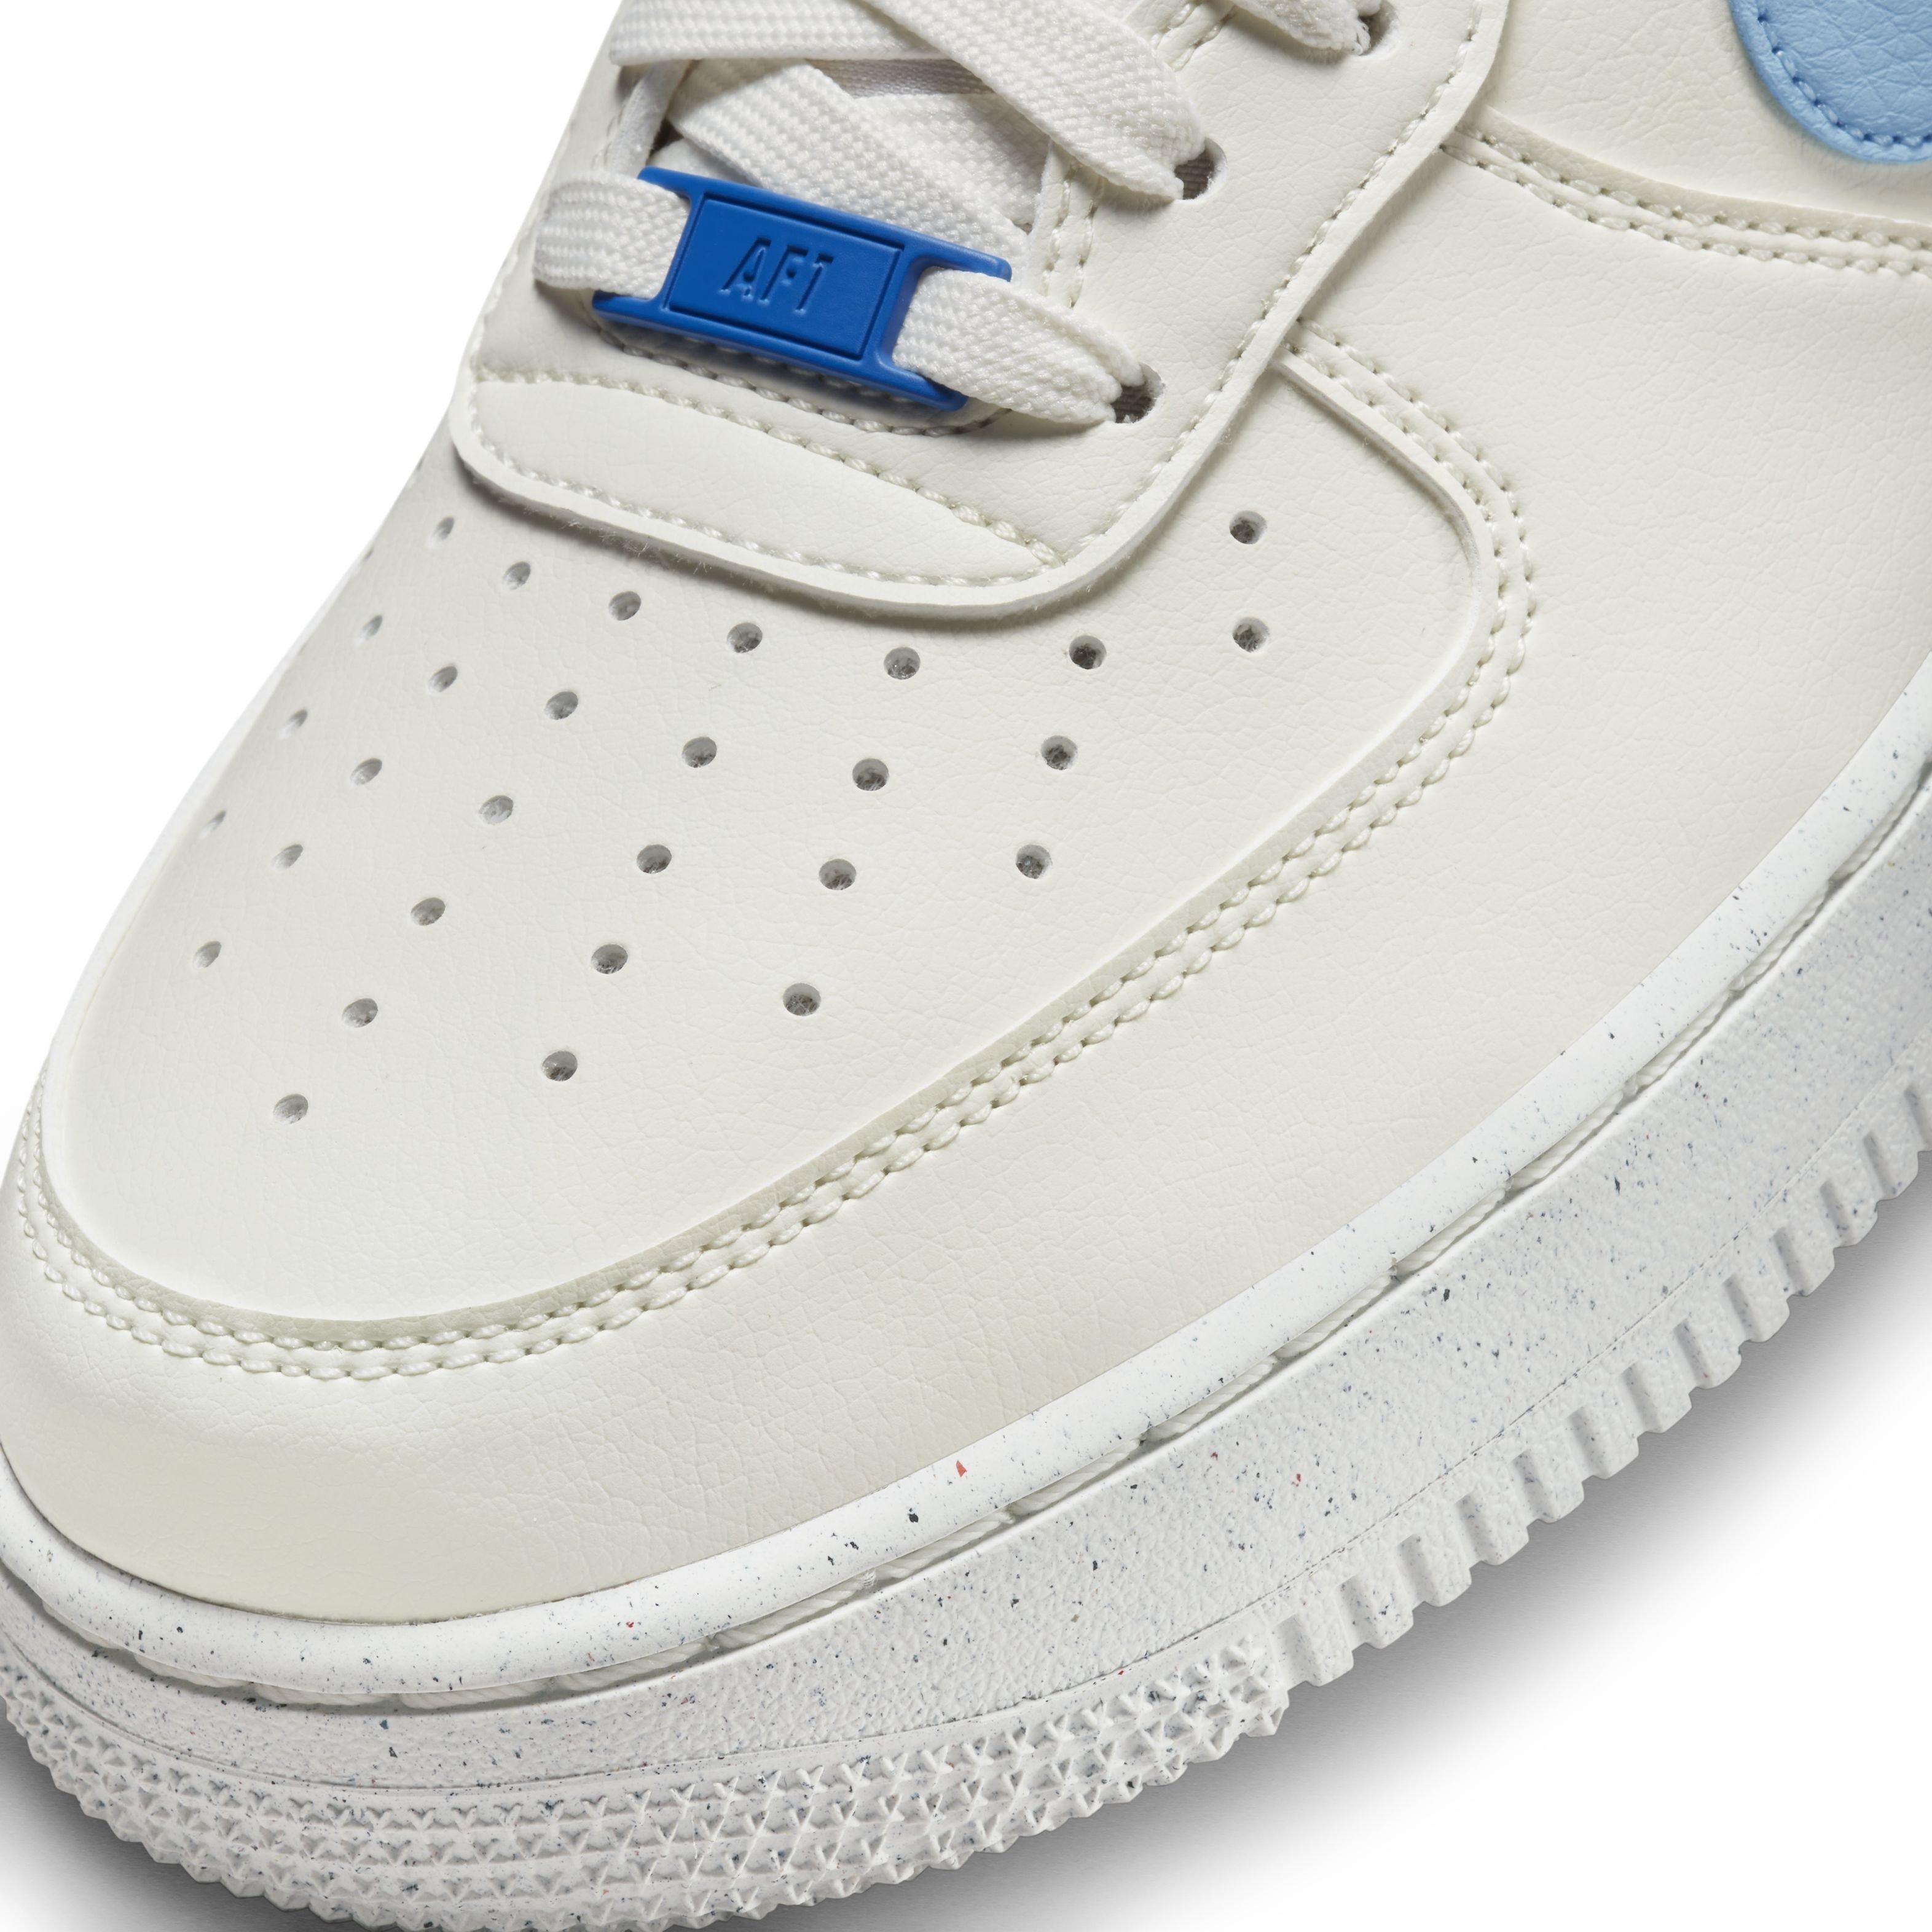 Nike Sportswear FORCE 1 LV8 2 UNISEX - Sneaker low - sail/blue chill/medium  blue/black/weiß 